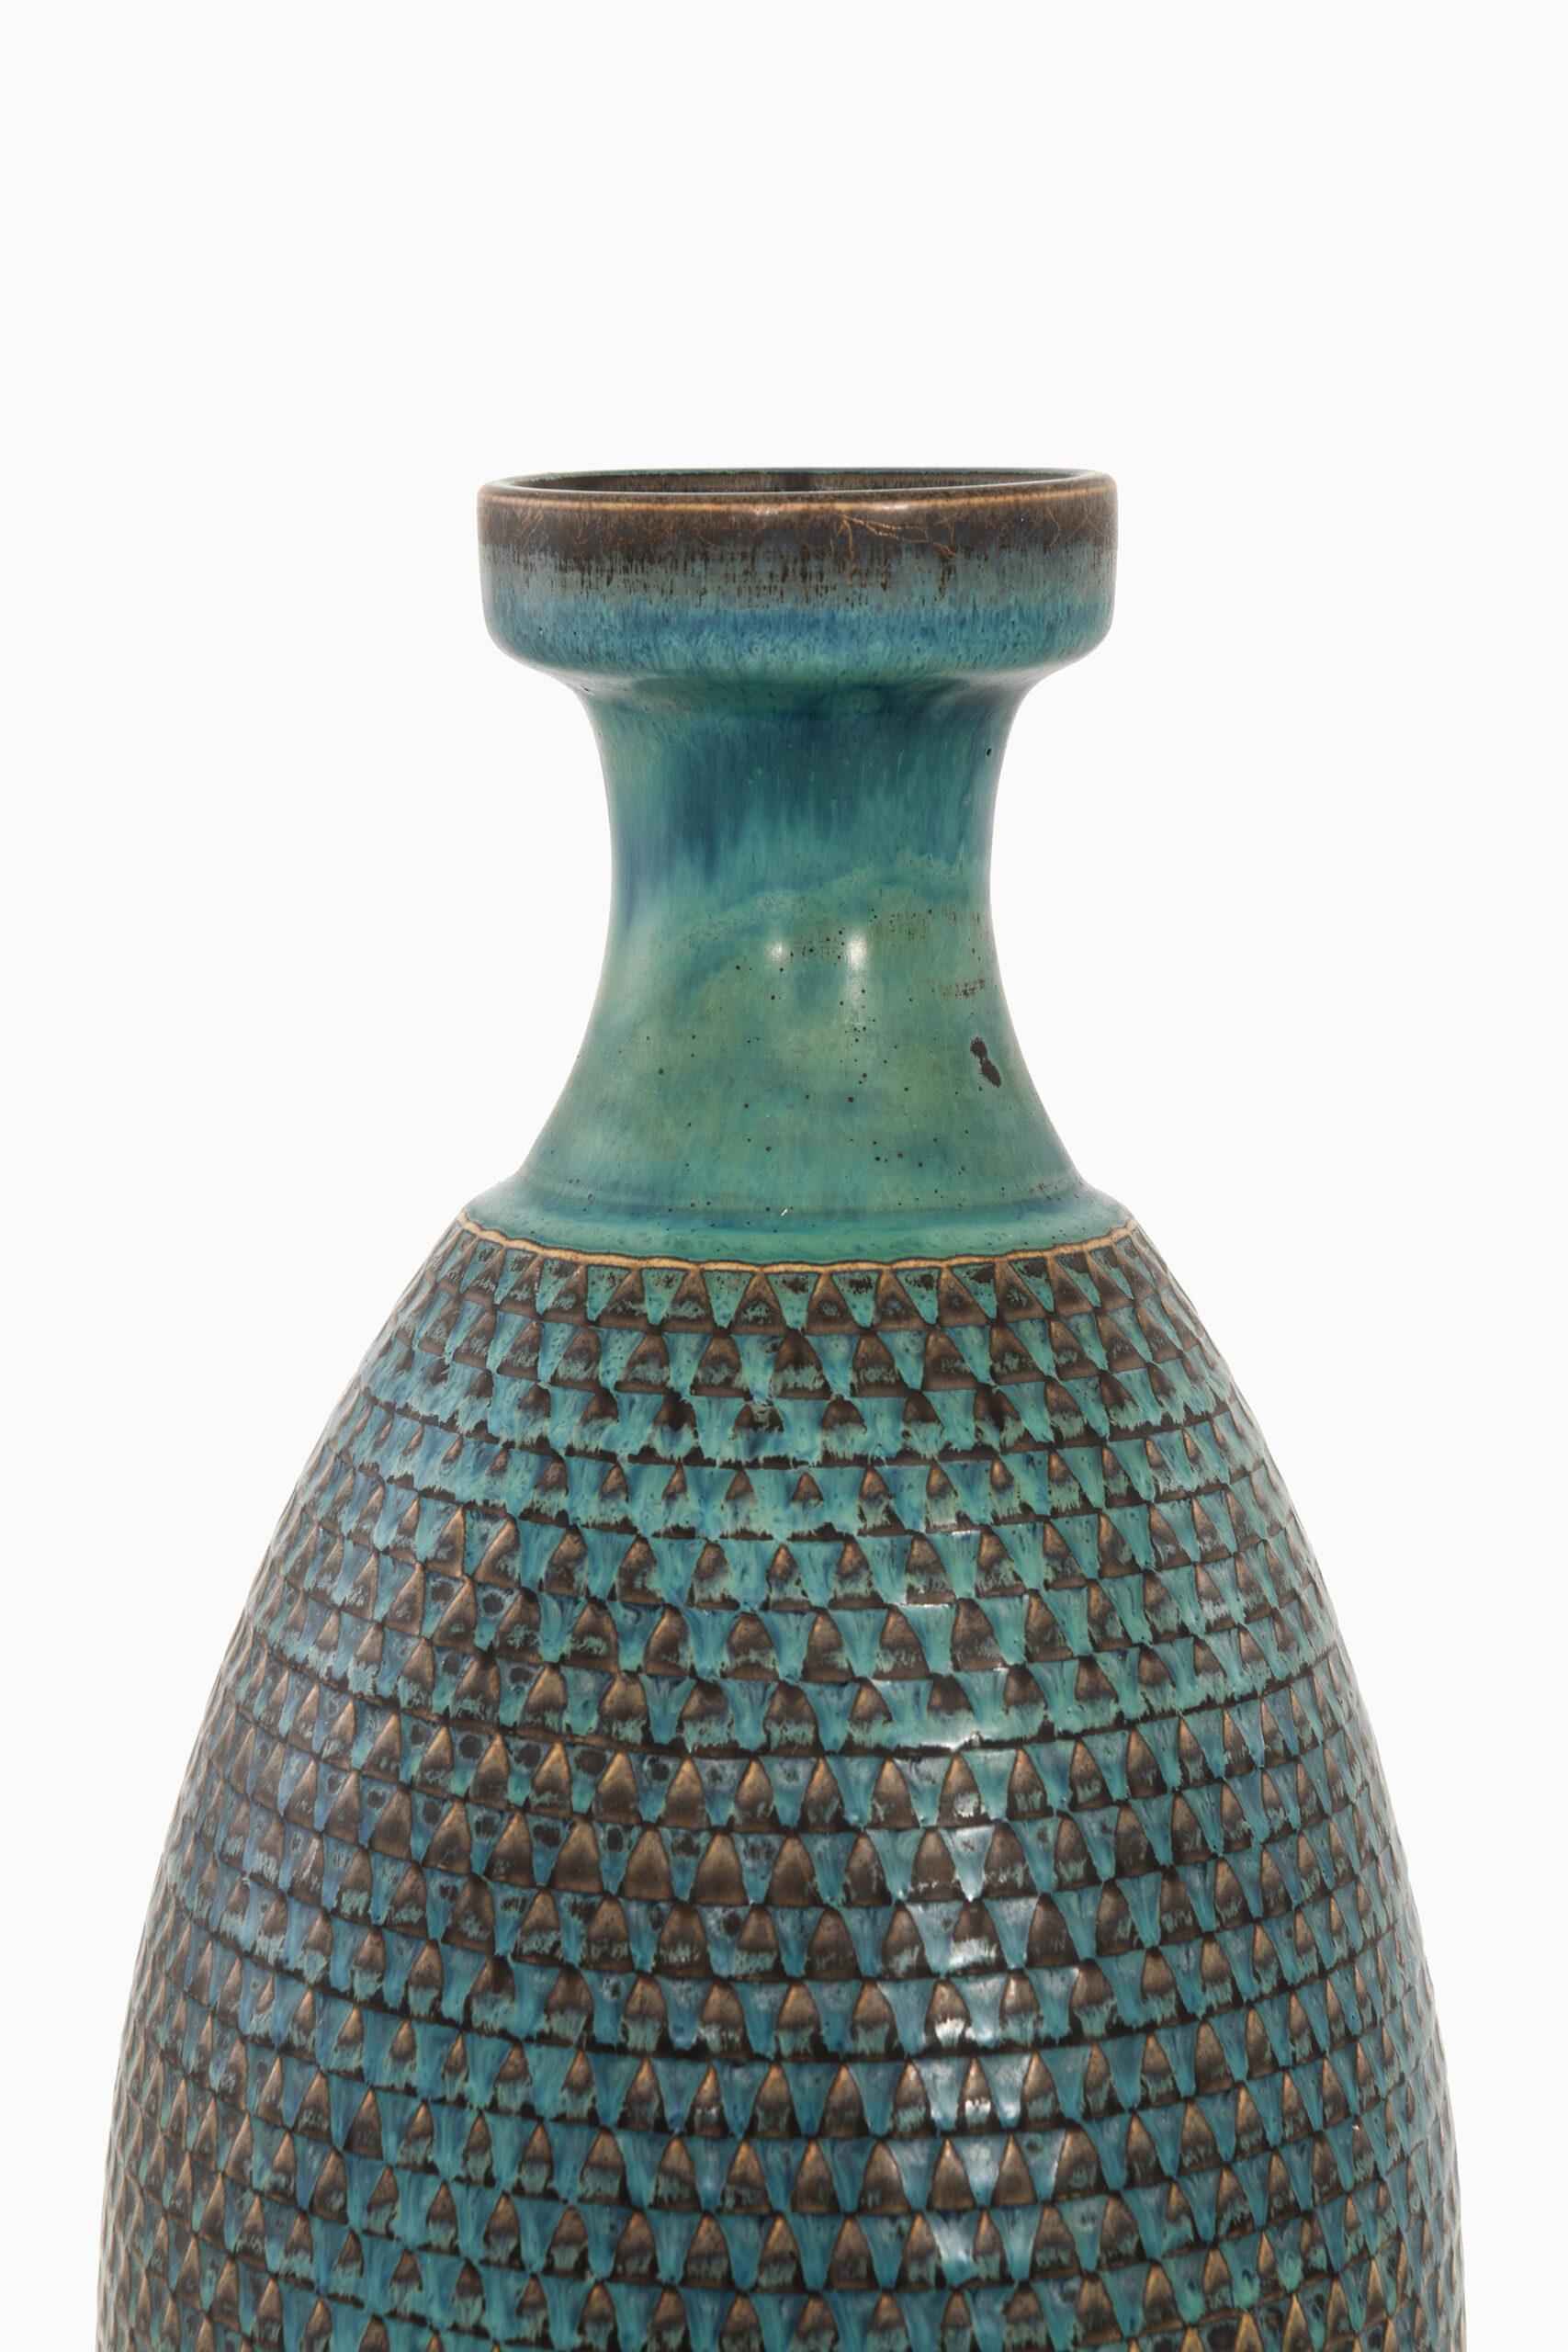 Rare and large ceramic vase designed by Stig Lindberg. Produced by Gustavsberg in Sweden.